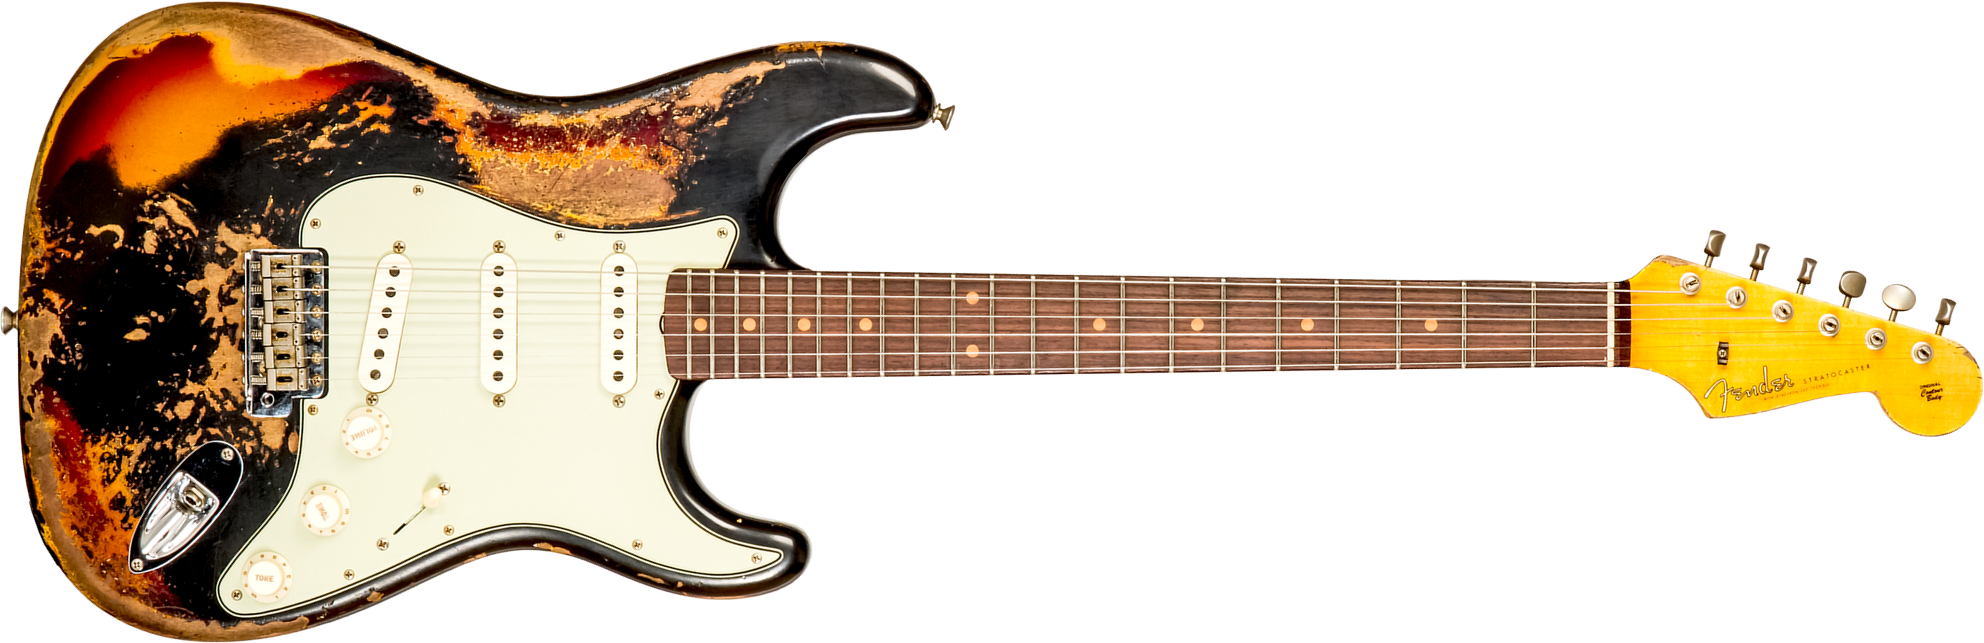 Fender Custom Shop Strat 1959 3s Trem Rw #cz576154 - Super Heavy Relic Black O. 3-color Sunburst - Guitarra eléctrica con forma de str. - Main picture